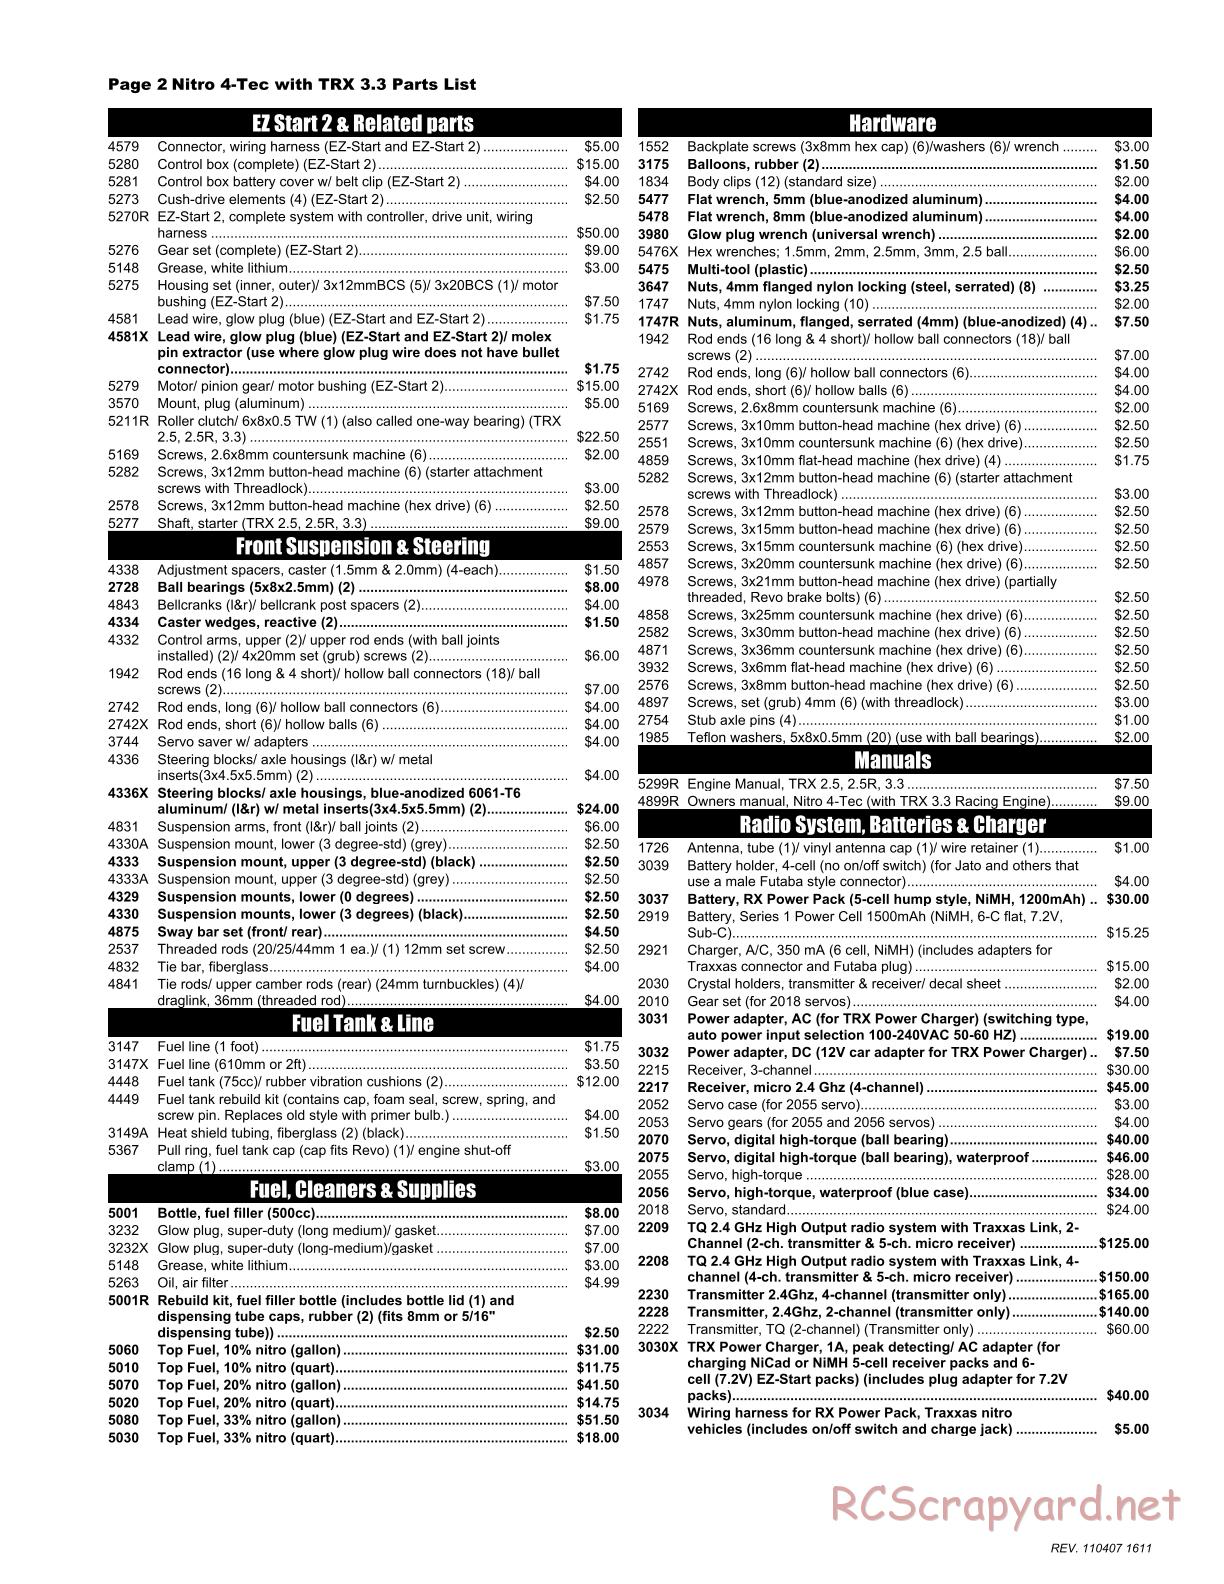 Traxxas - Nitro 4-Tec 3.3 (2006) - Parts List - Page 2